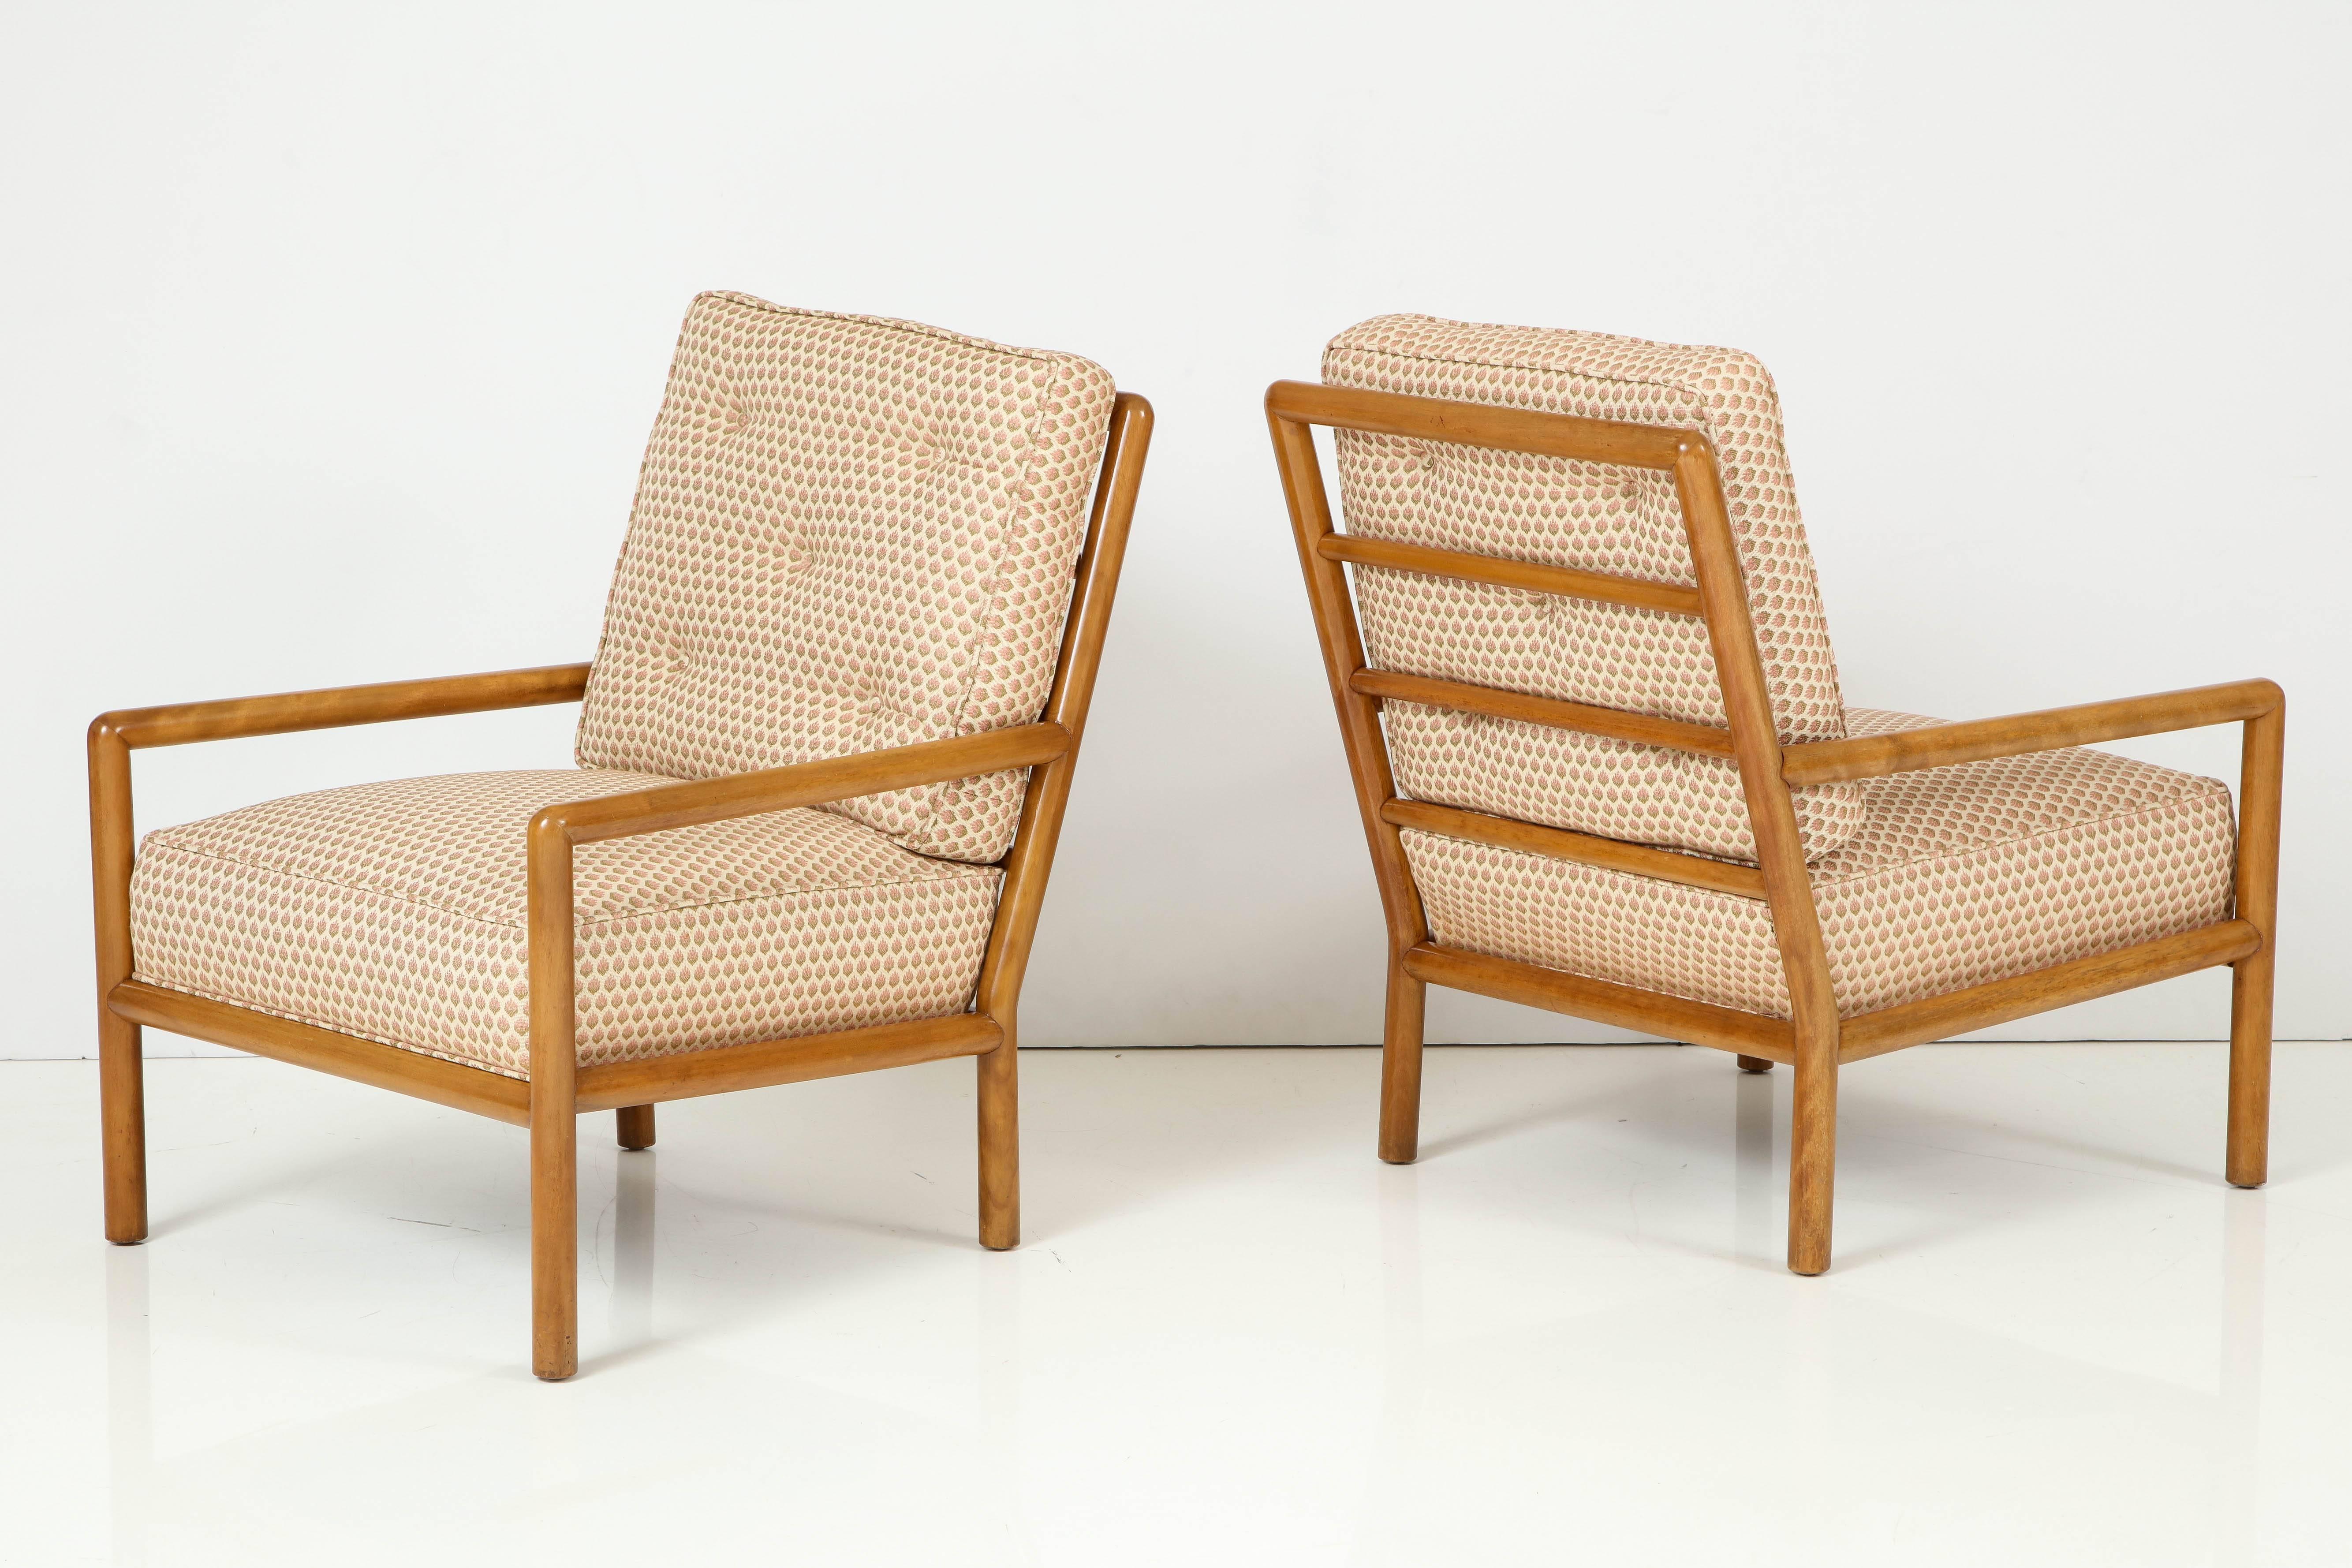 Pair of T.H. Robsjohn-Gibbings lounge chairs made by Widdicomb, circa 1955-1956.